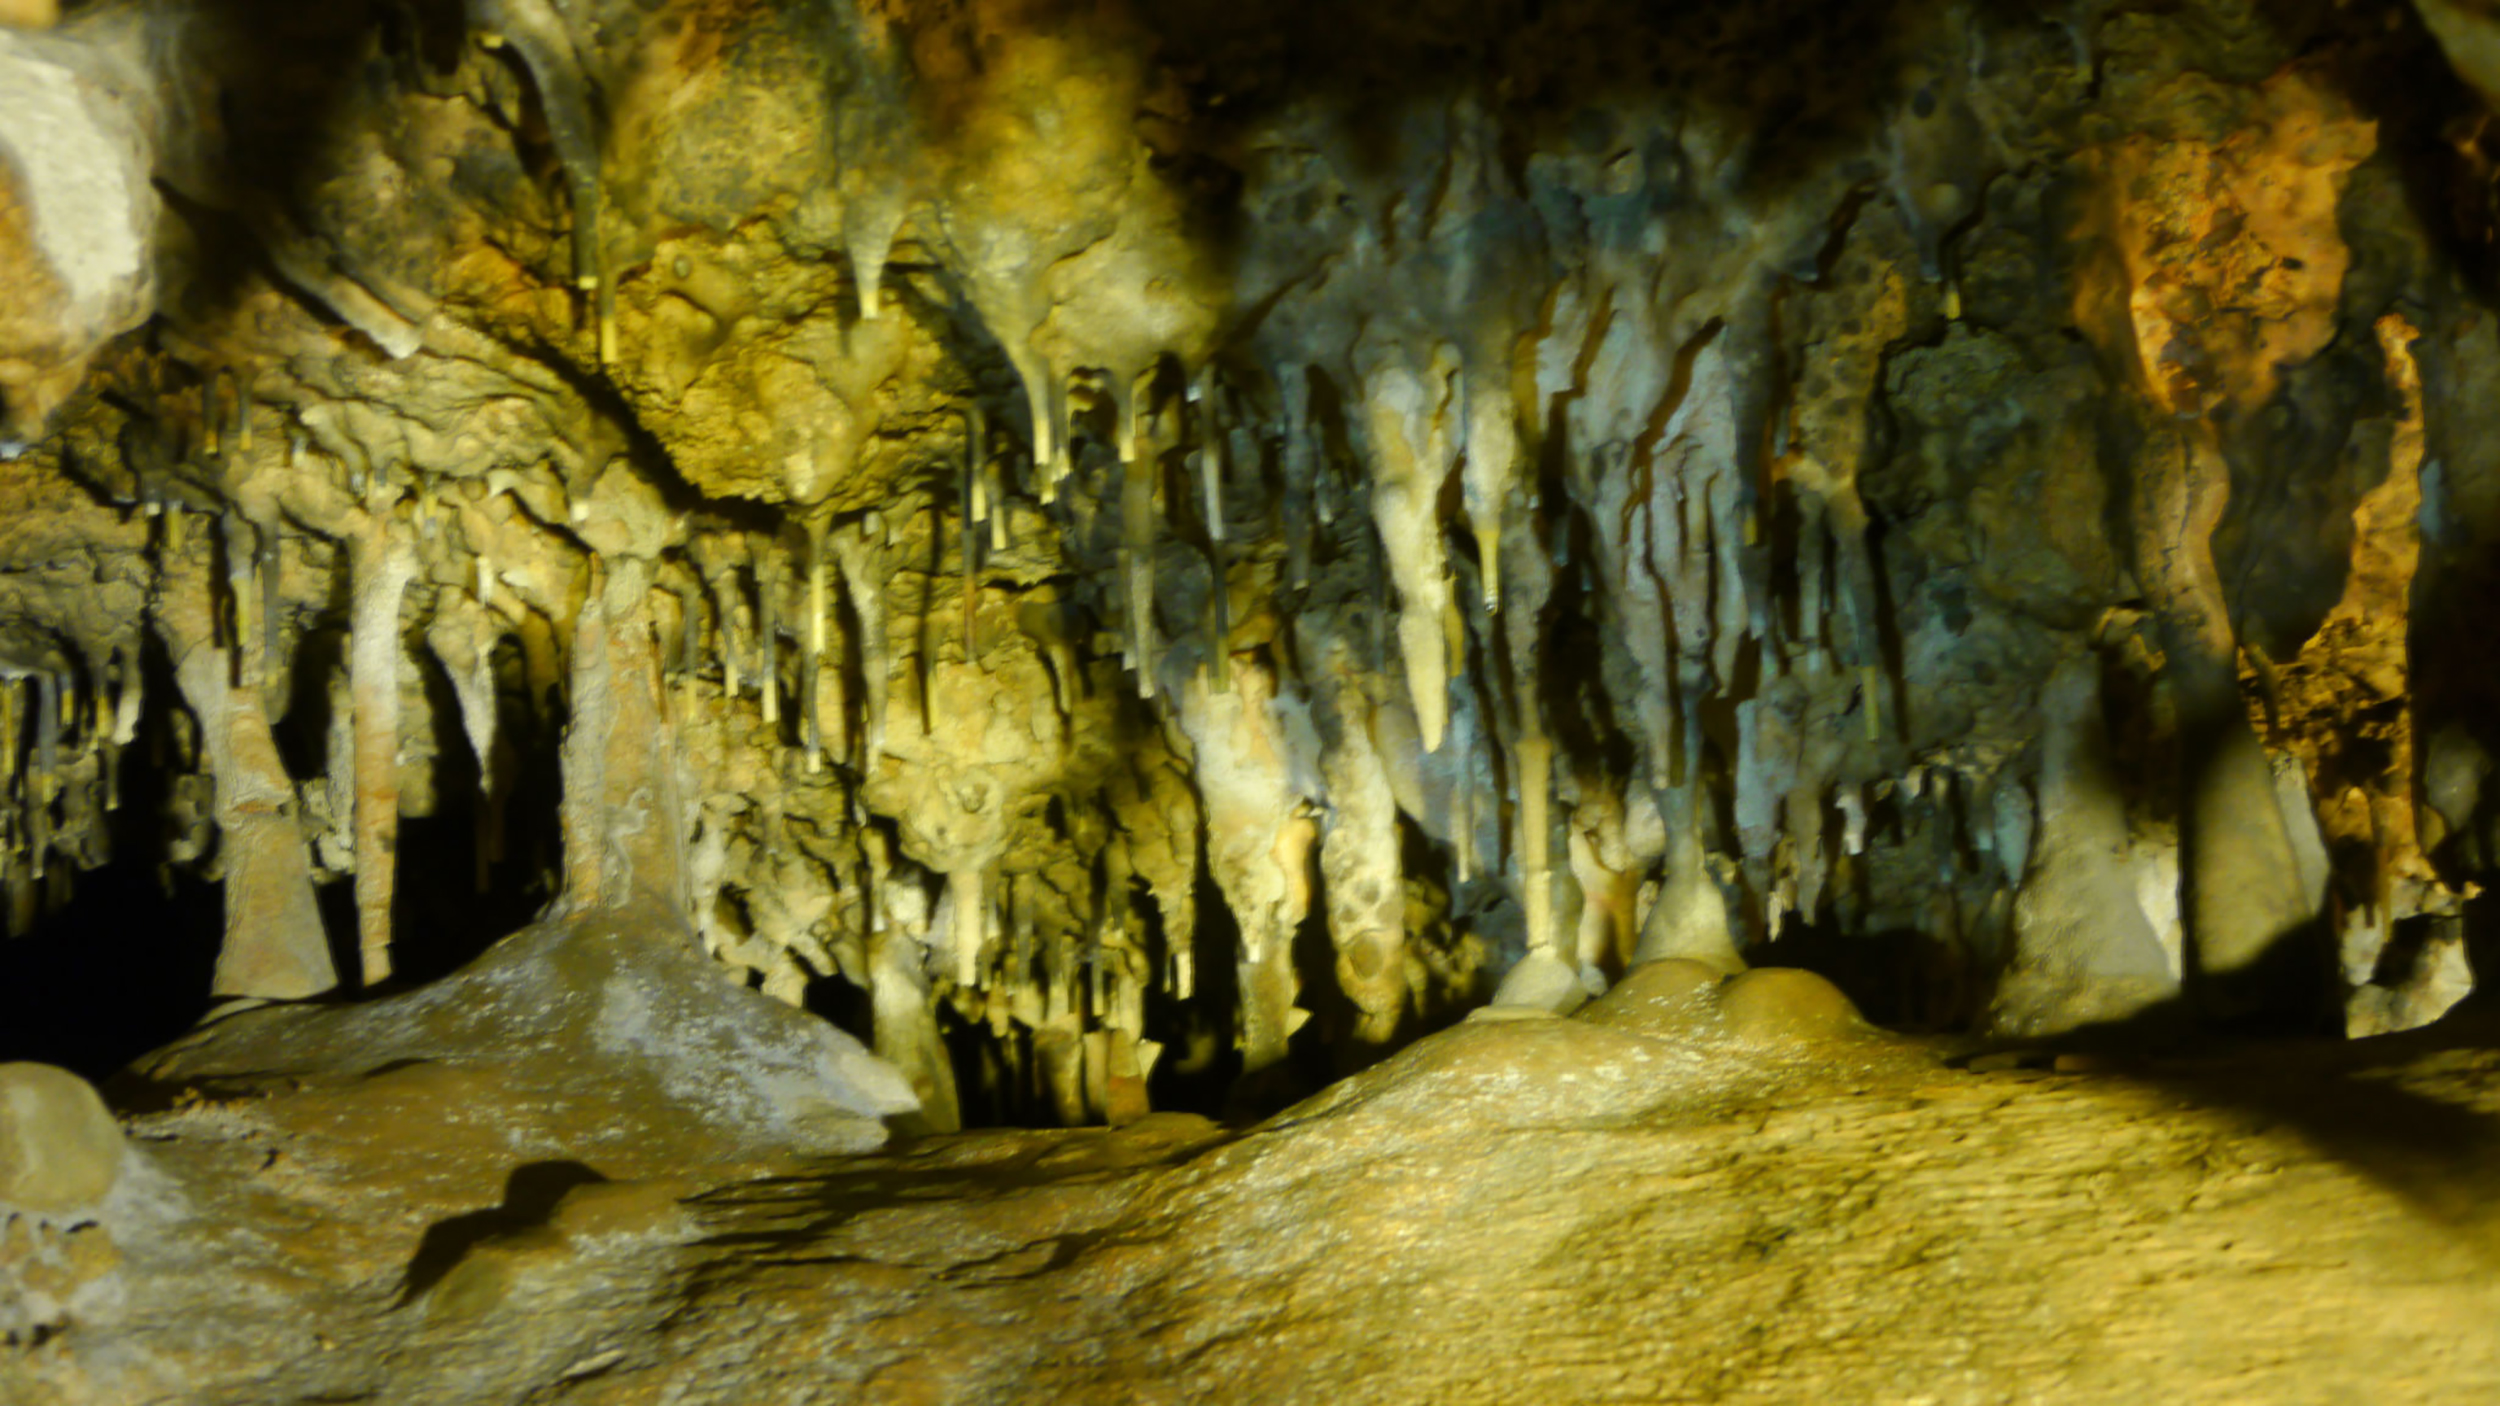 Ninu's Cave